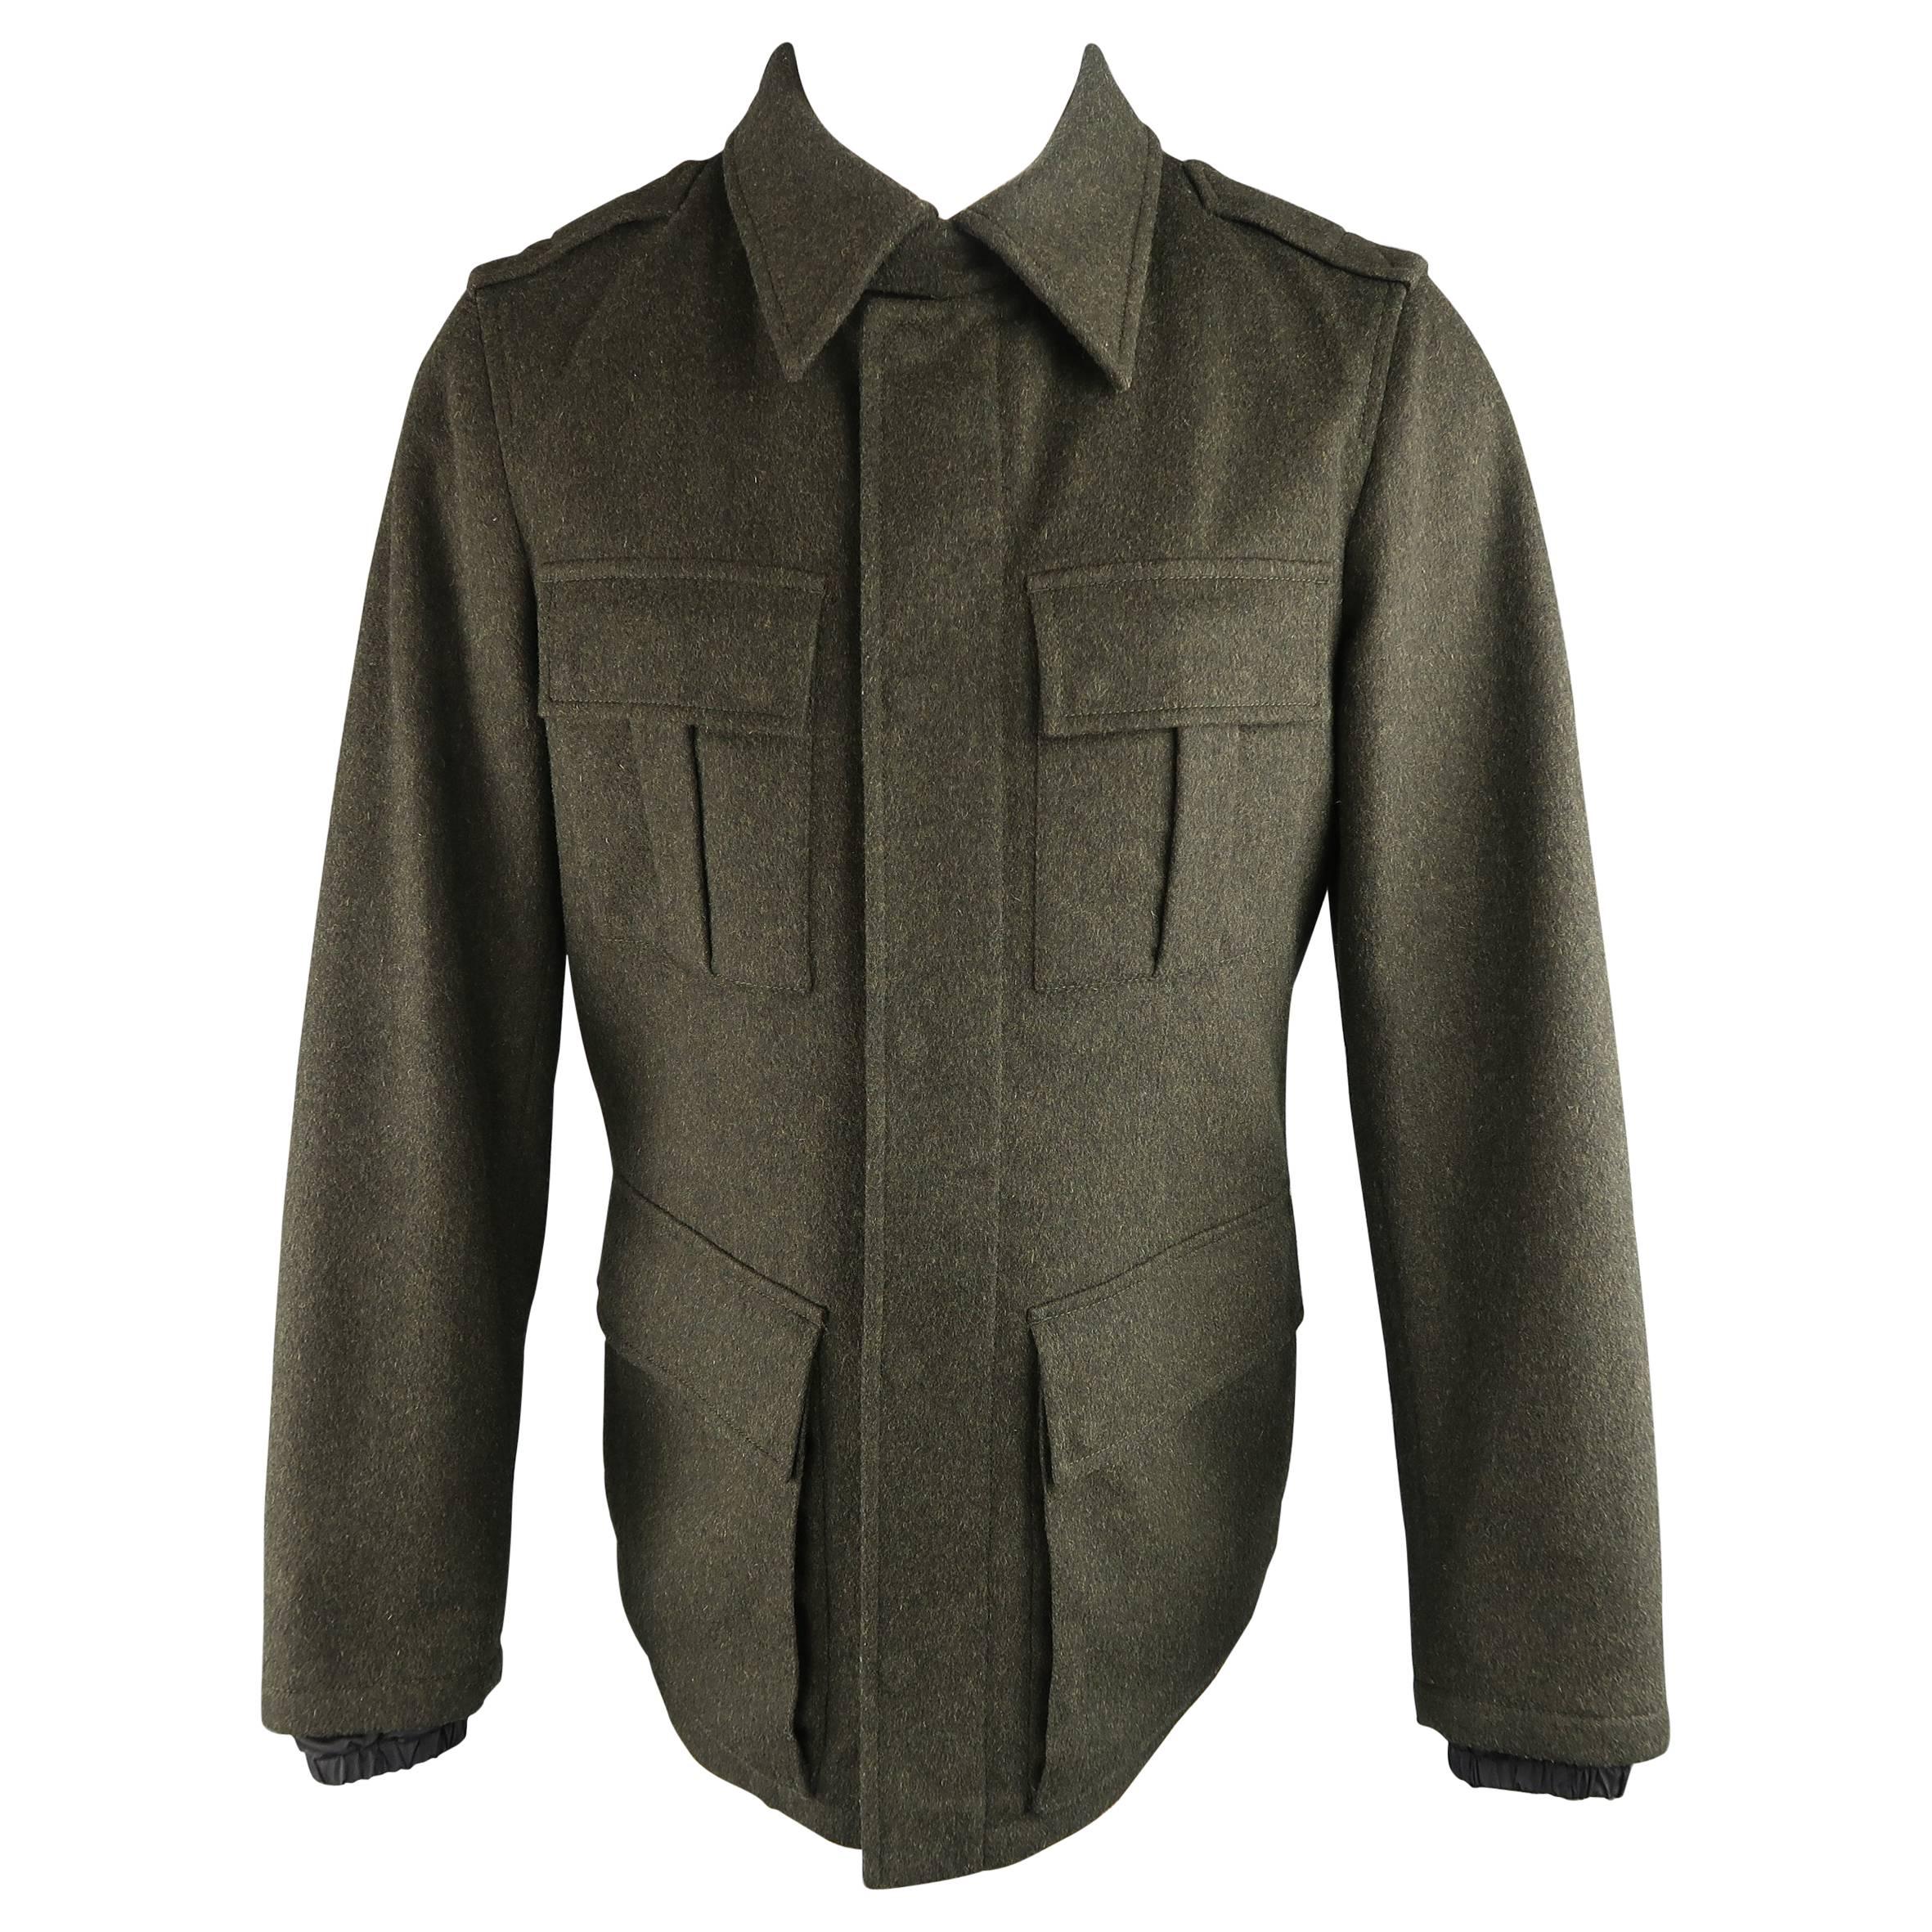 Men's PRADA 40 Heather Green Wool Collared Military Pea Coat Jacket